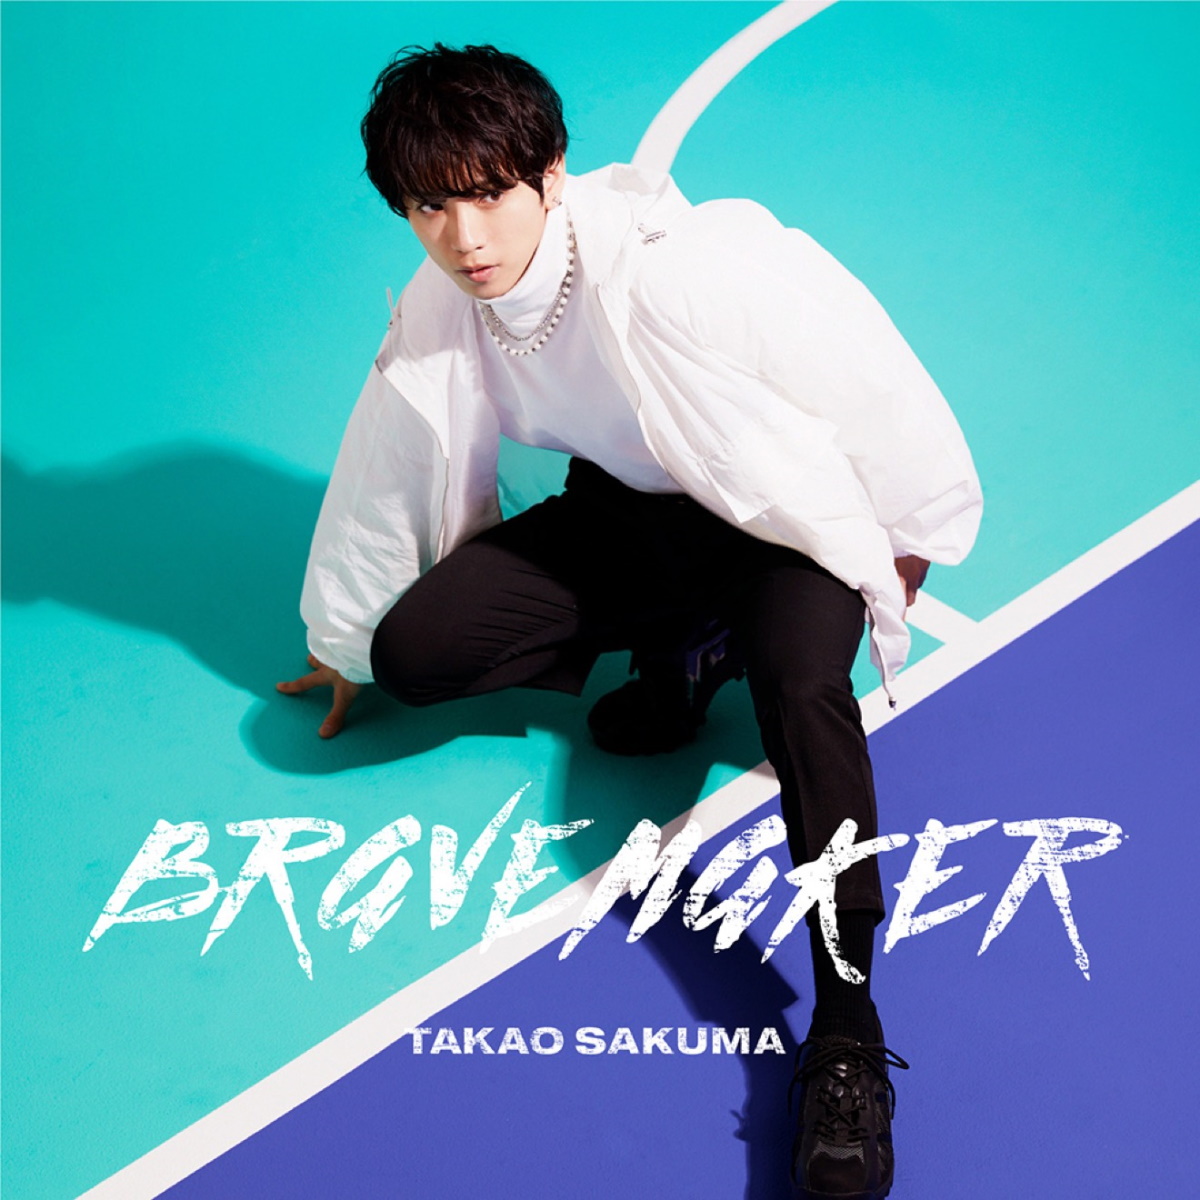 Cover art for『Takao Sakuma - BRAVE MAKER』from the release『BRAVE MAKER